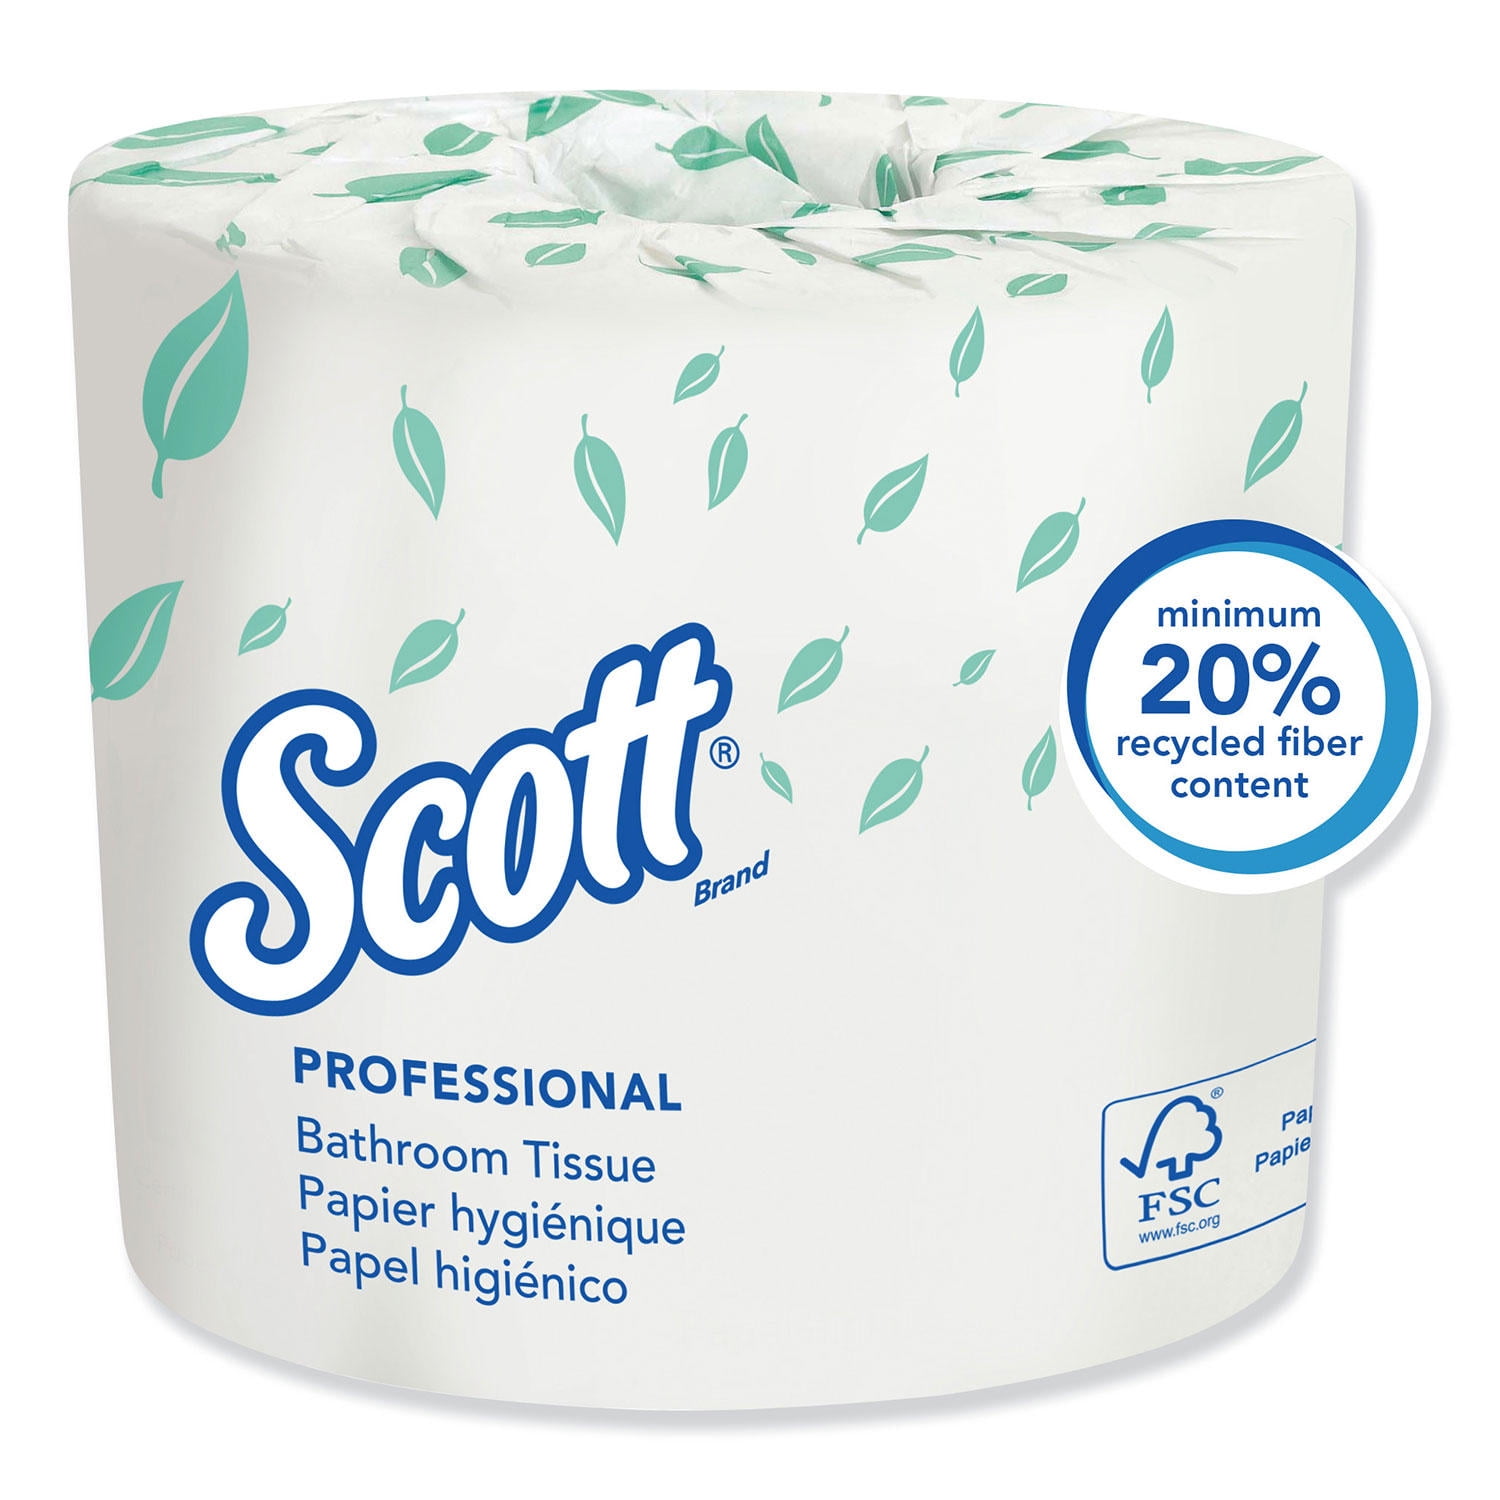 Scott Standard Roll Bath Tissue 2-ply No Tax White 20-count 